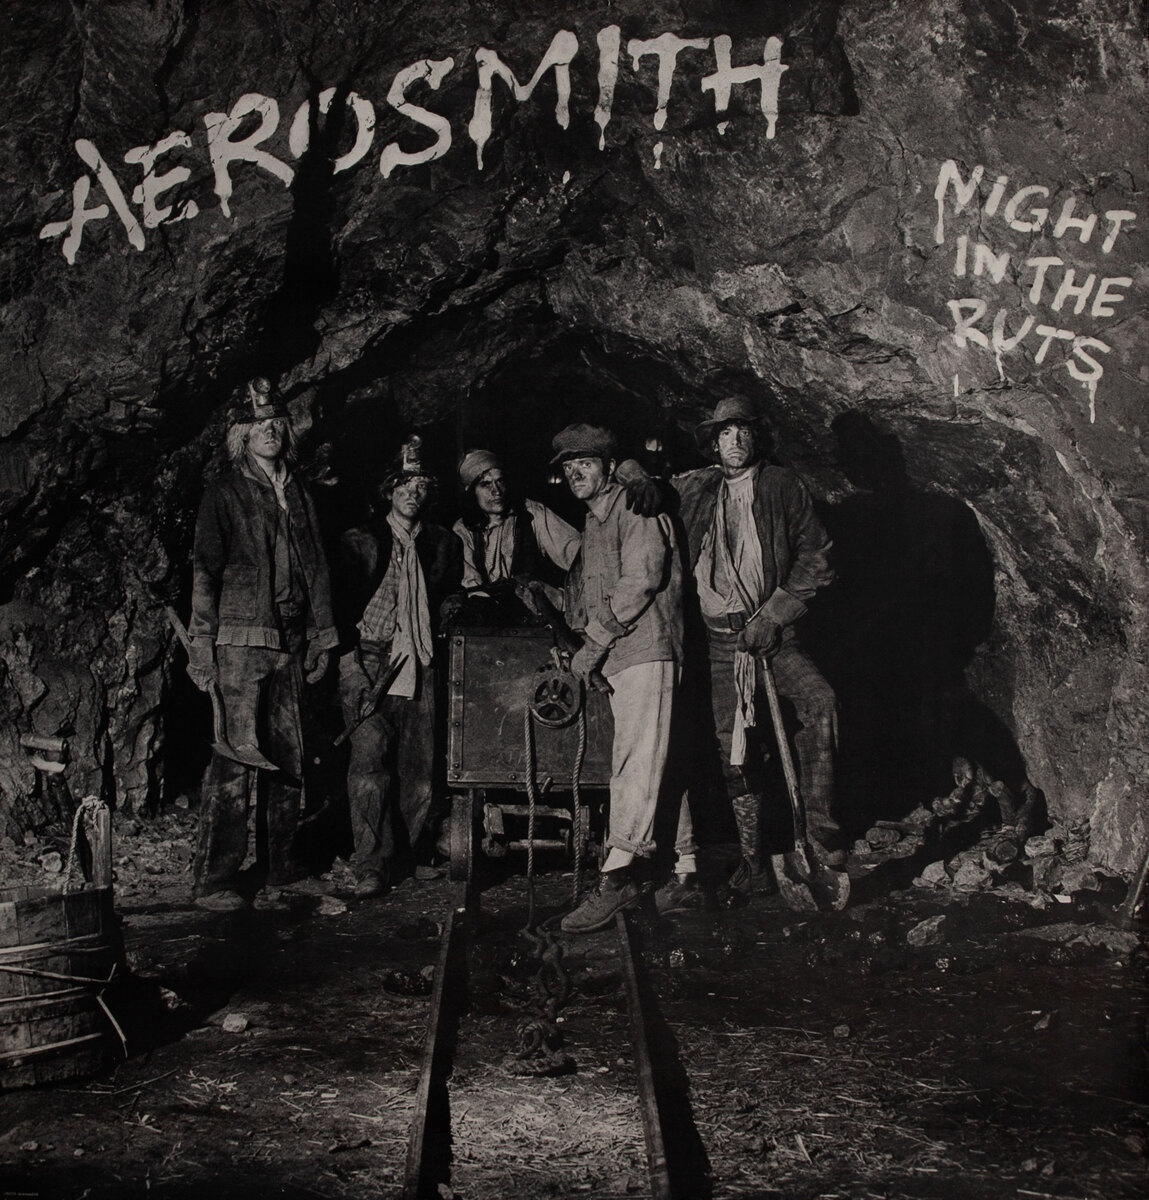 Aerosmith Night in the Ruts